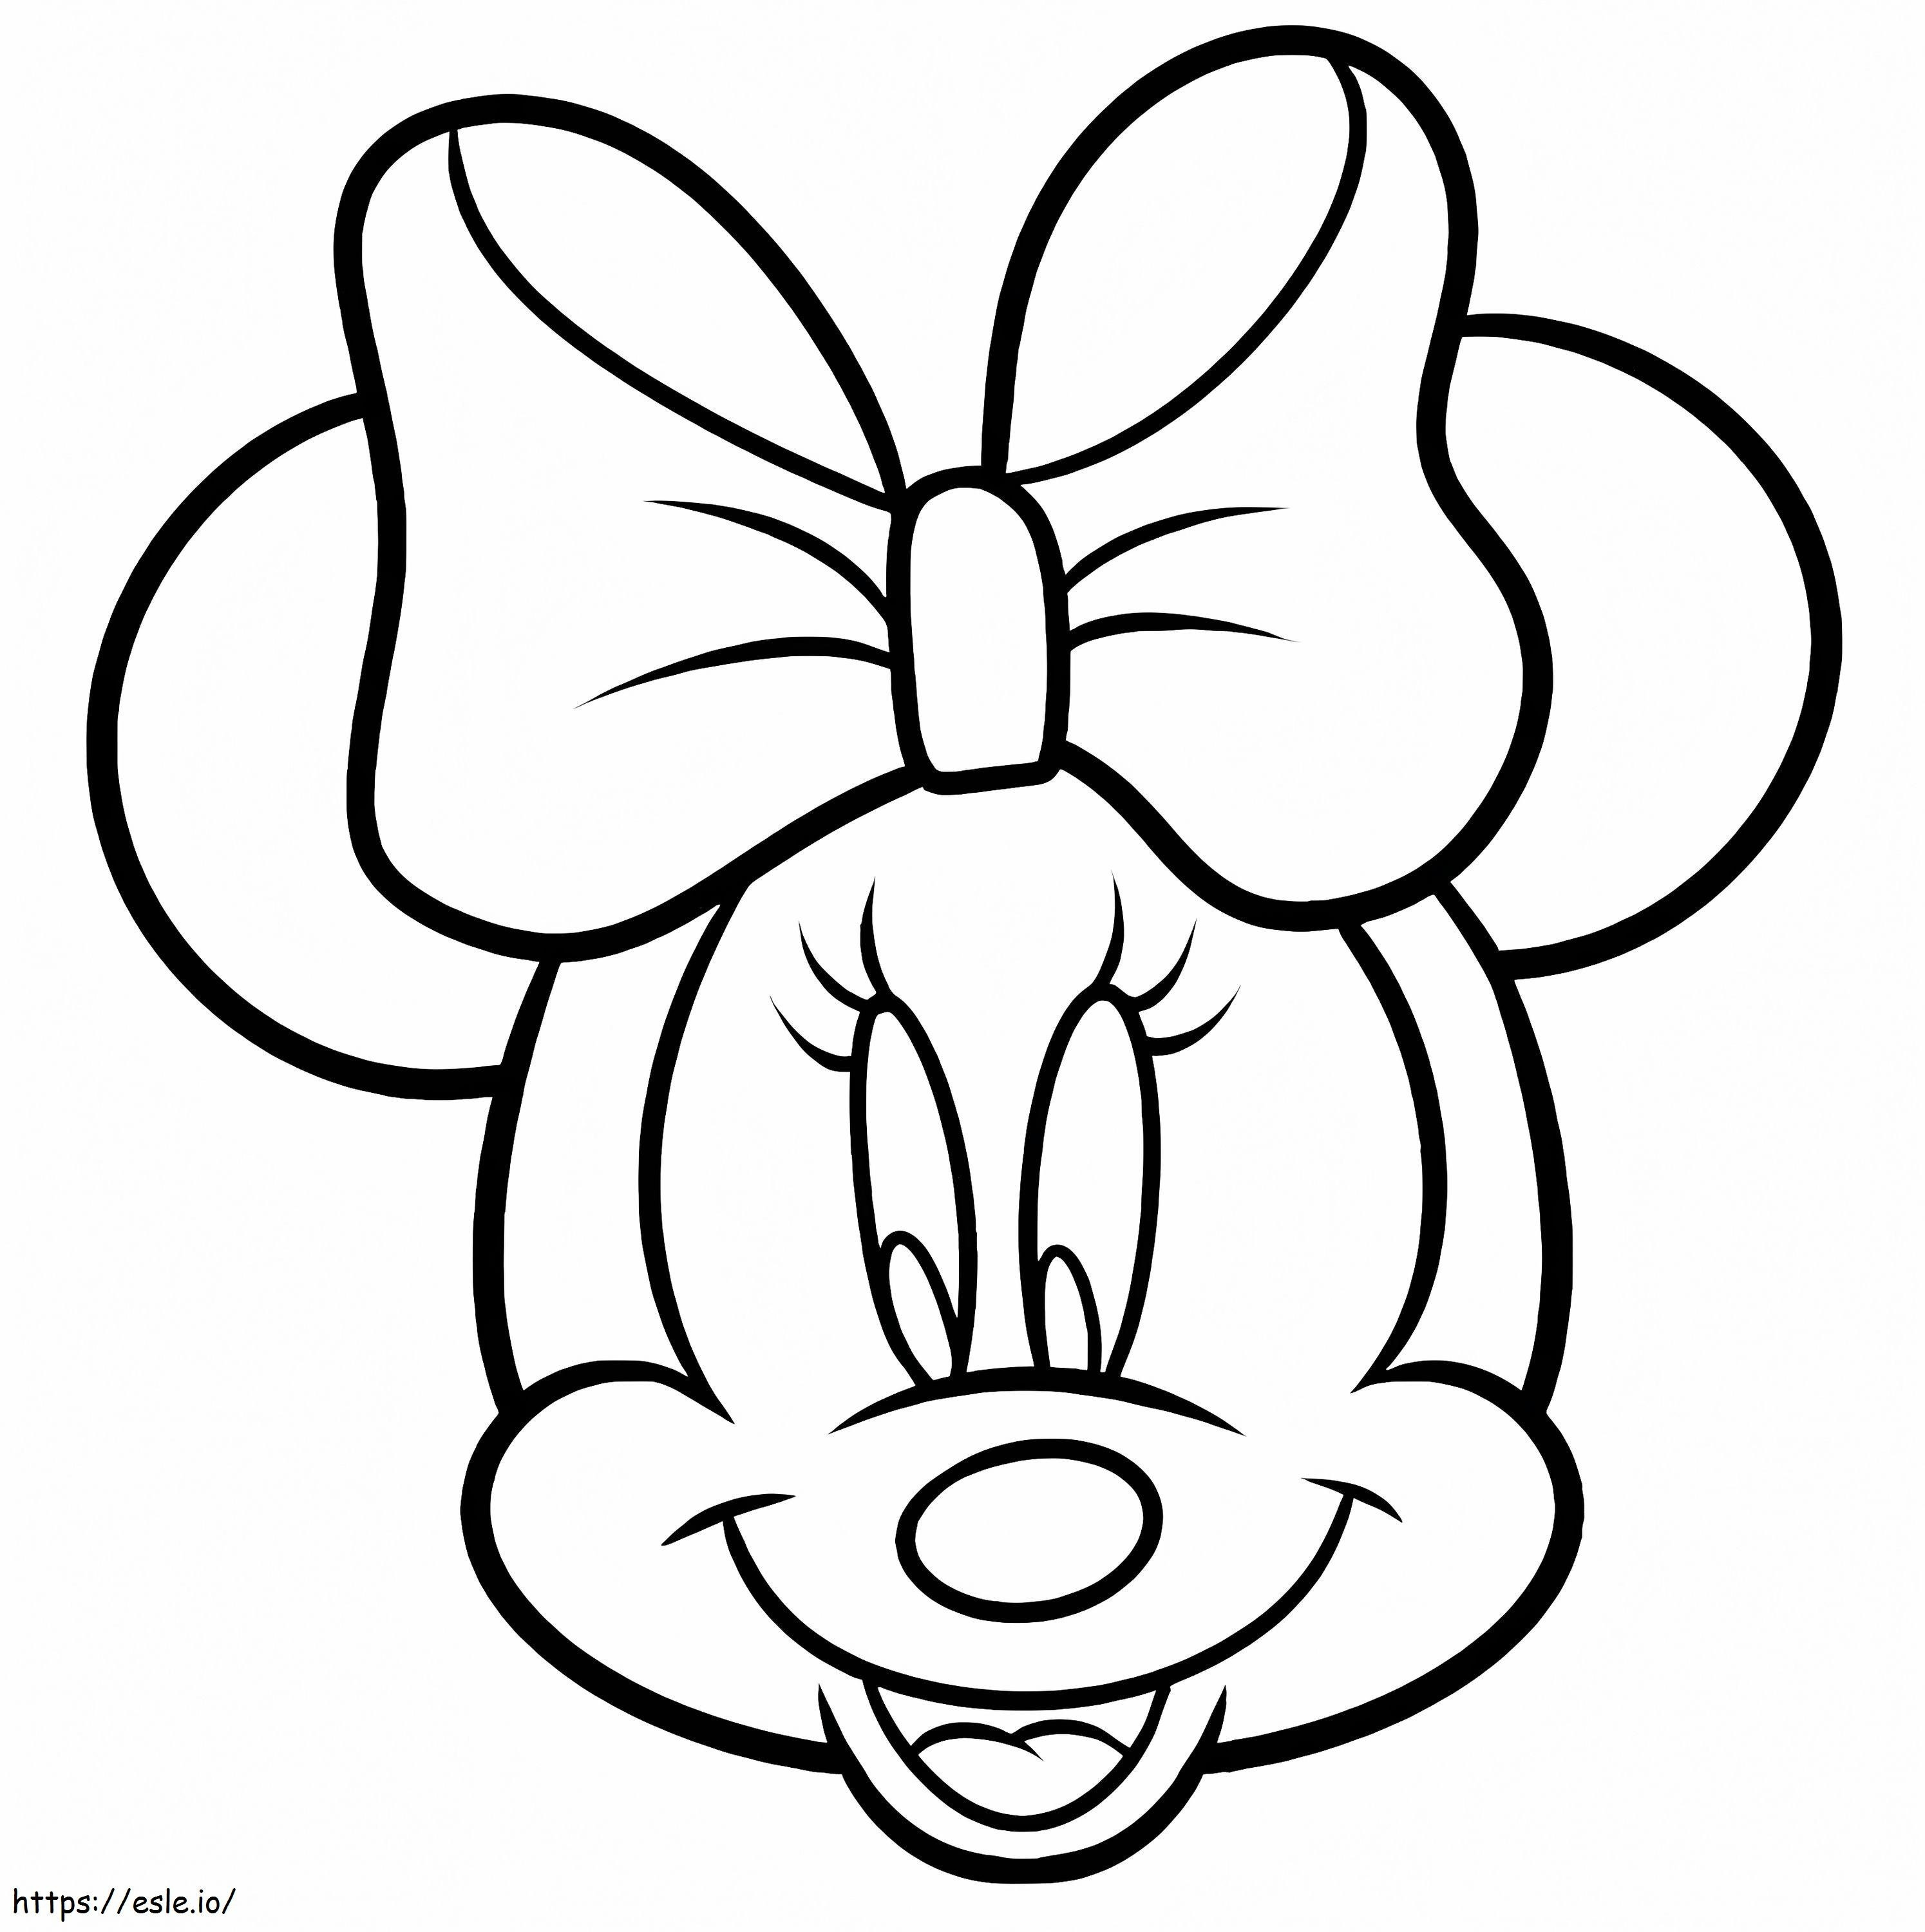 Cara da Minnie Mouse para colorir